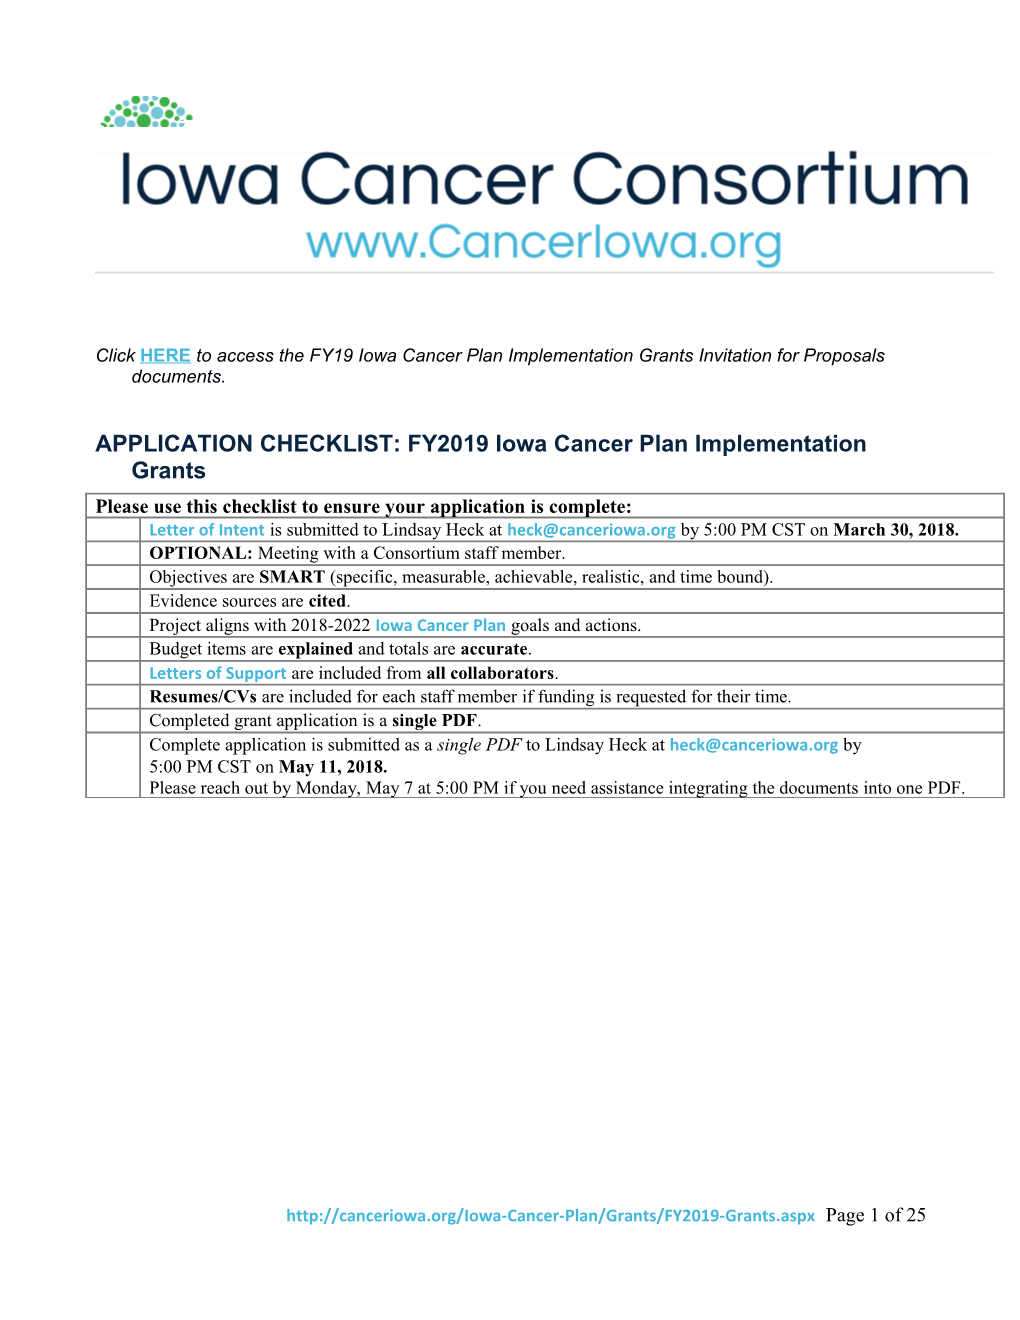 APPLICATION CHECKLIST: FY2019 Iowa Cancer Plan Implementation Grants